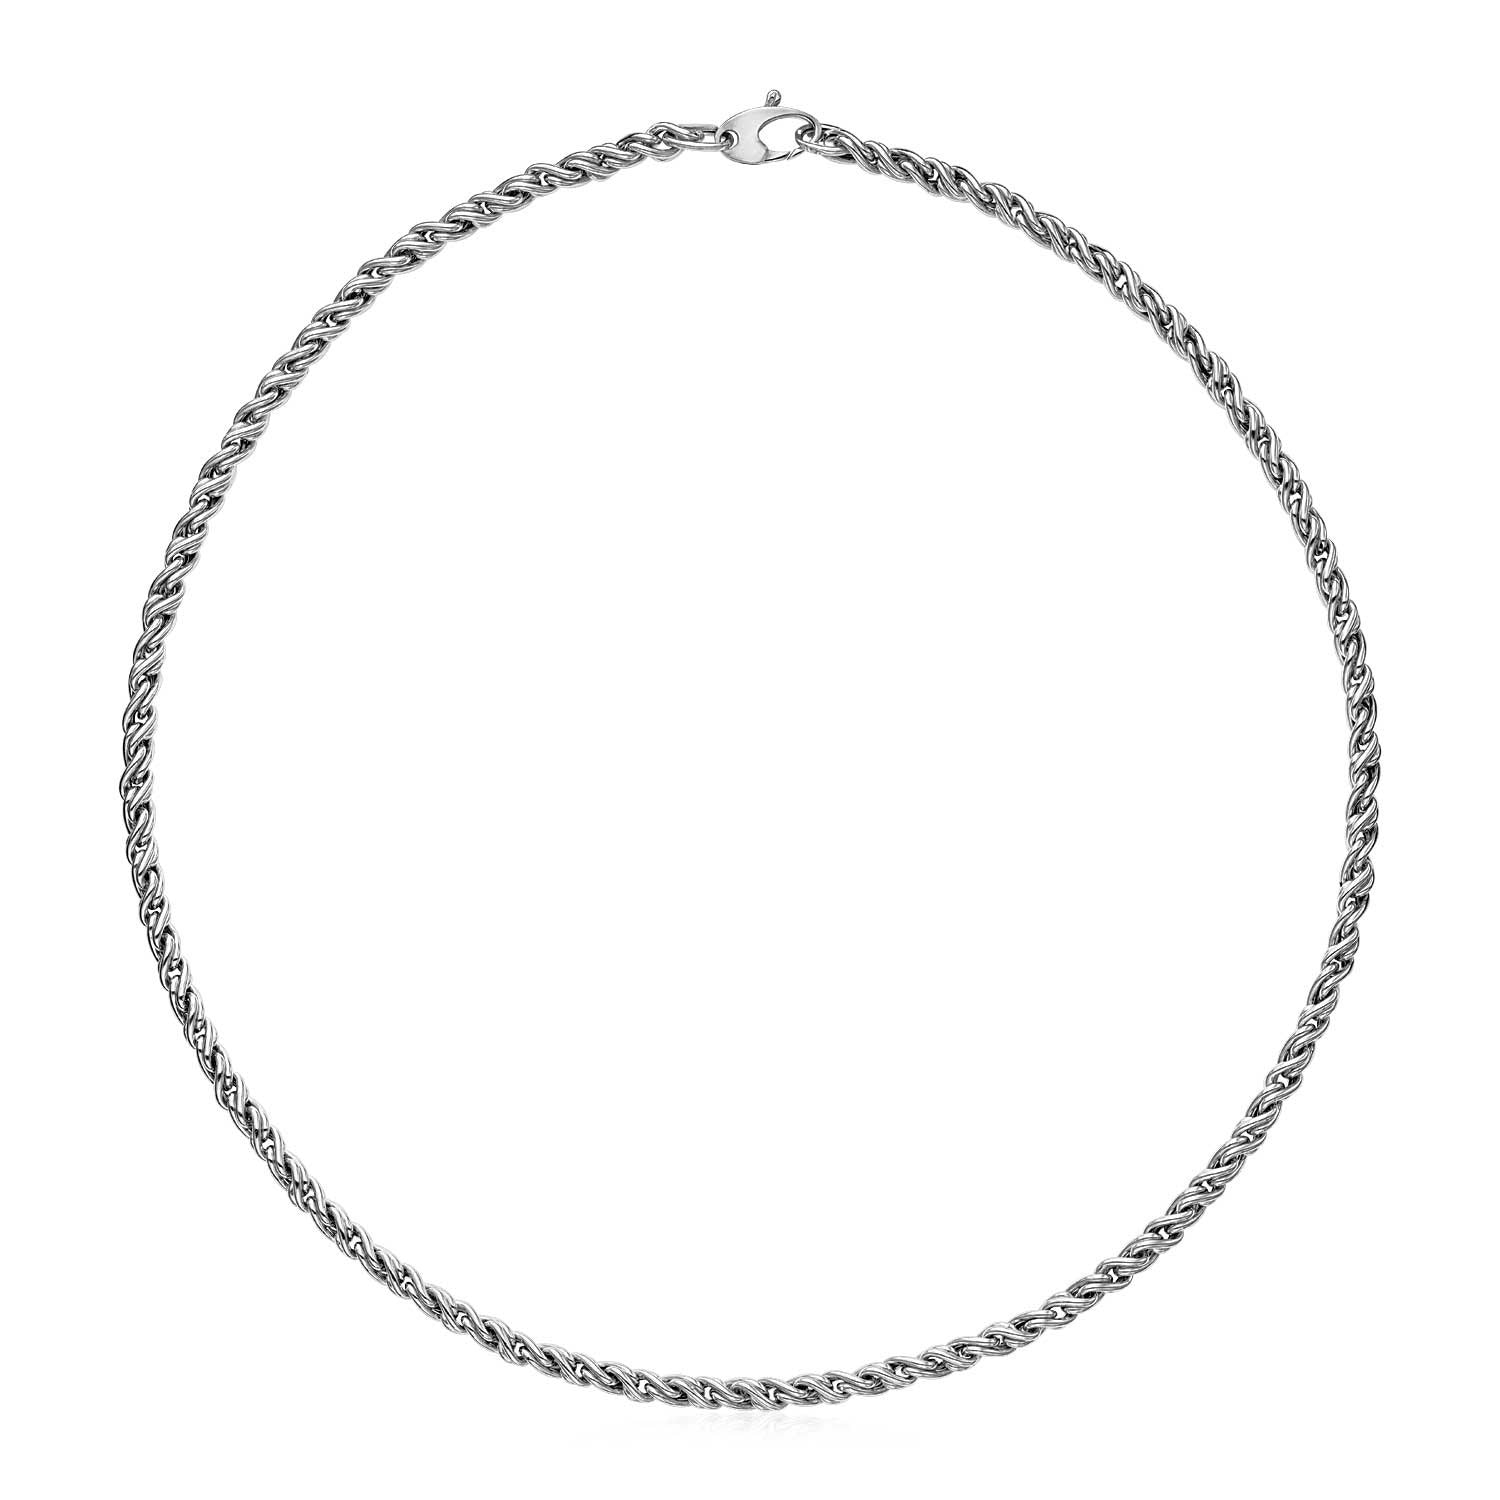 14k White Gold 17 inch Braid Link Necklace